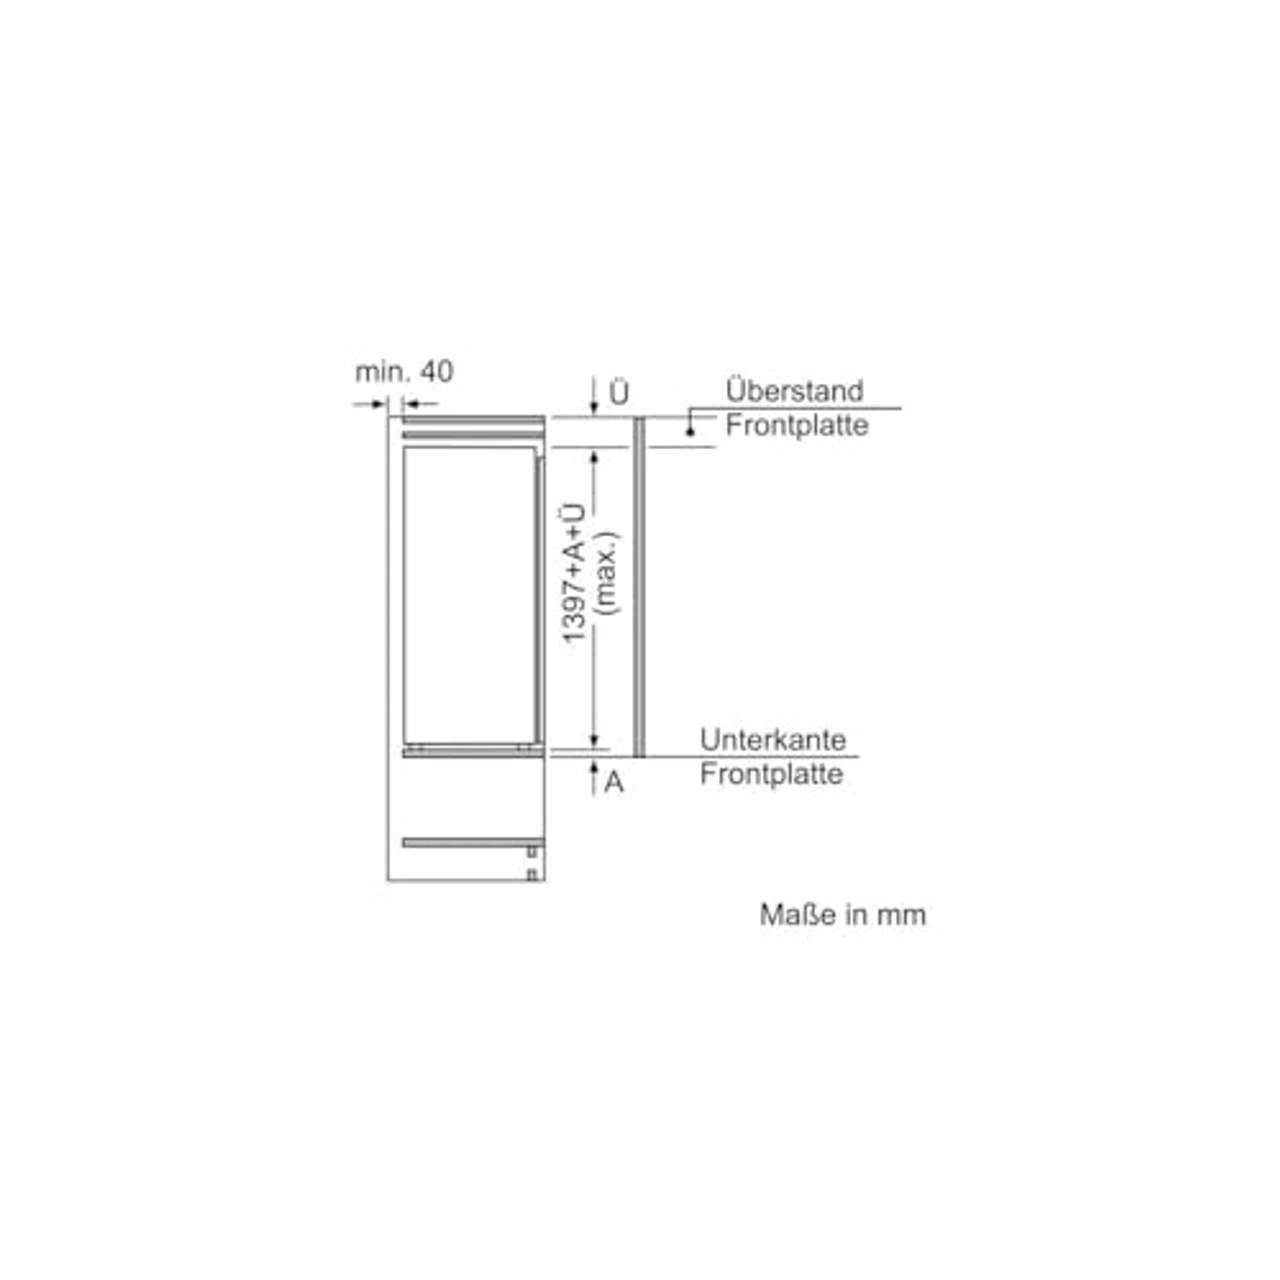 Bosch KIR51ADE0 Serie 6 Einbau-Kühlschrank